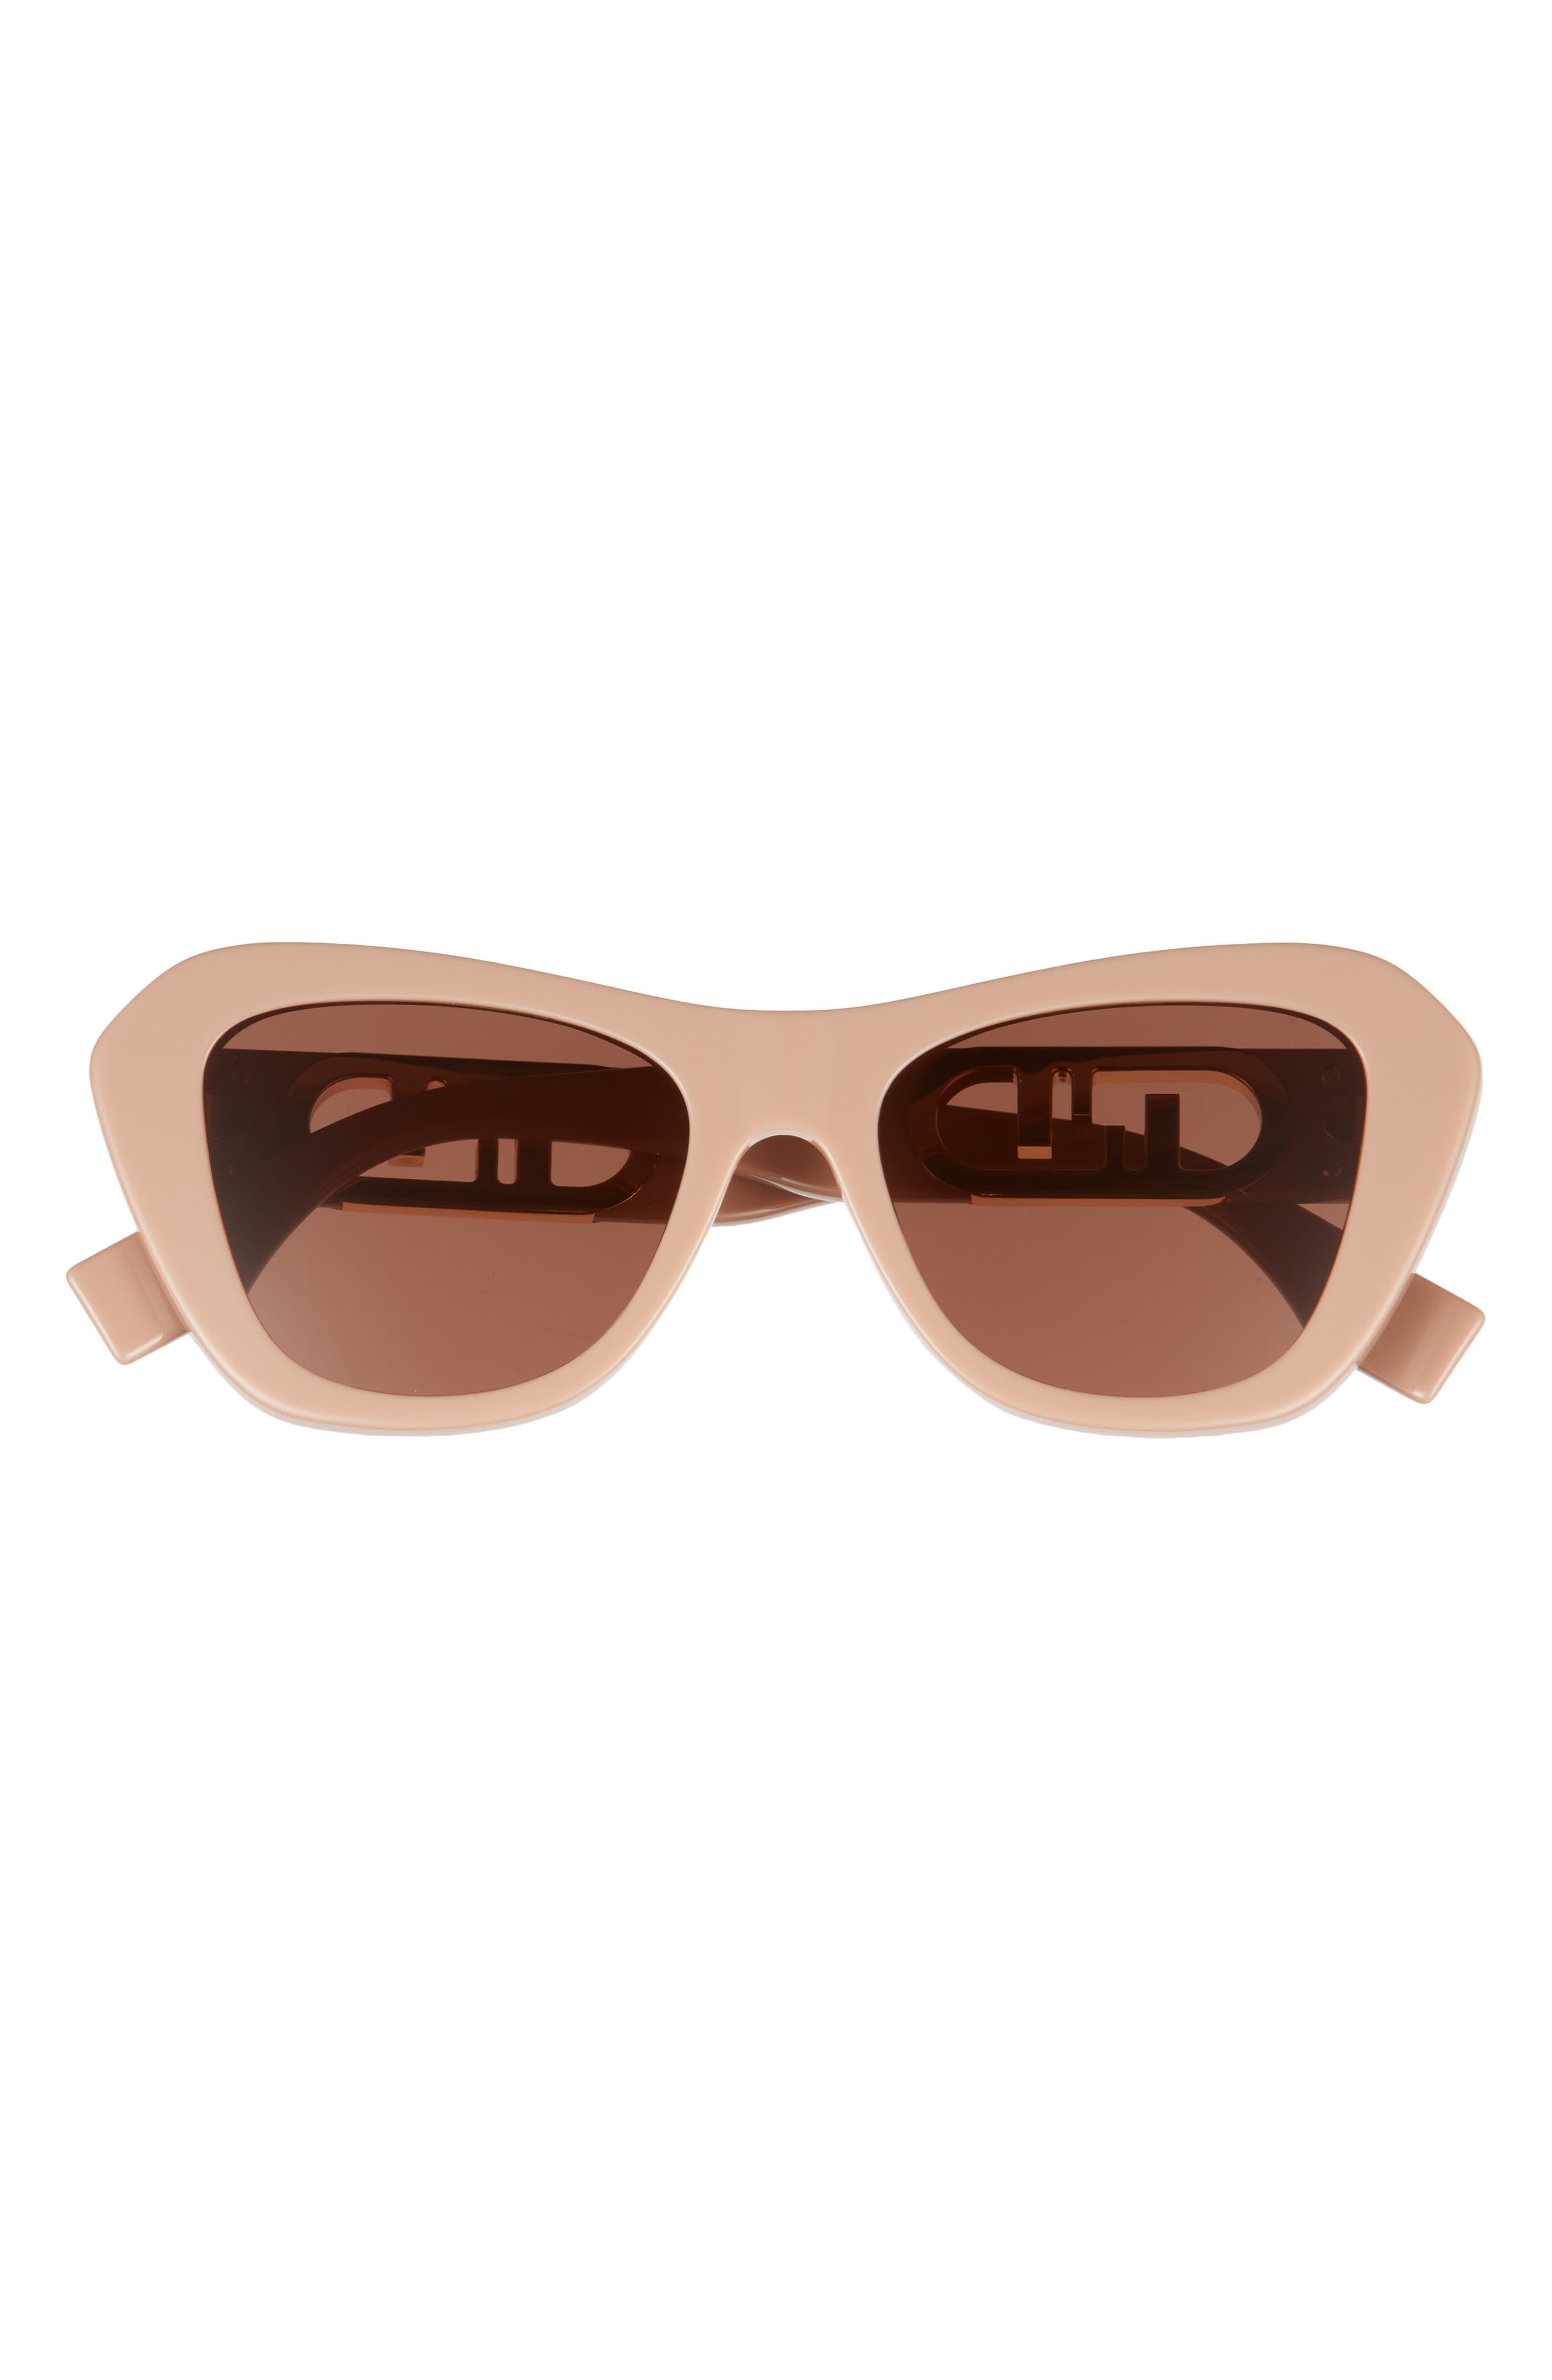 Fendi O'Lock - Gold metal sunglasses with brown lenses